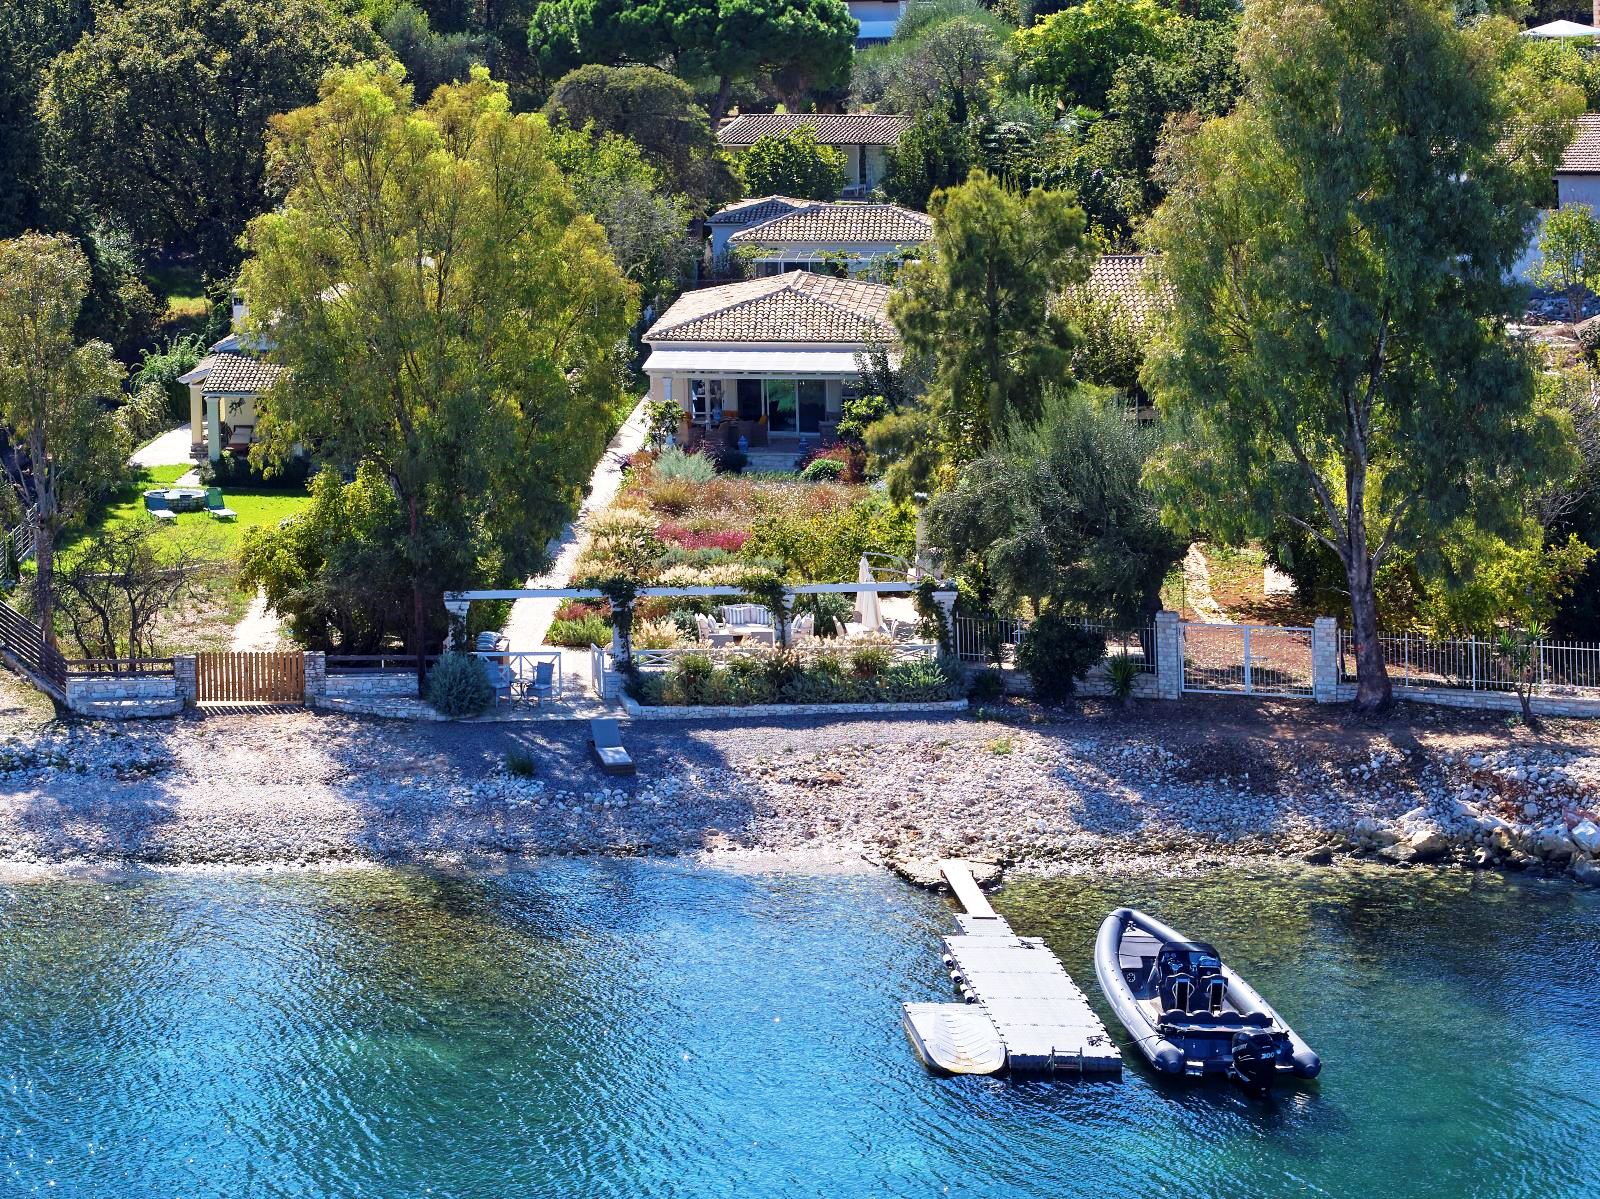 boat tied to jetty outside kogevina beach villa in corfu, greece